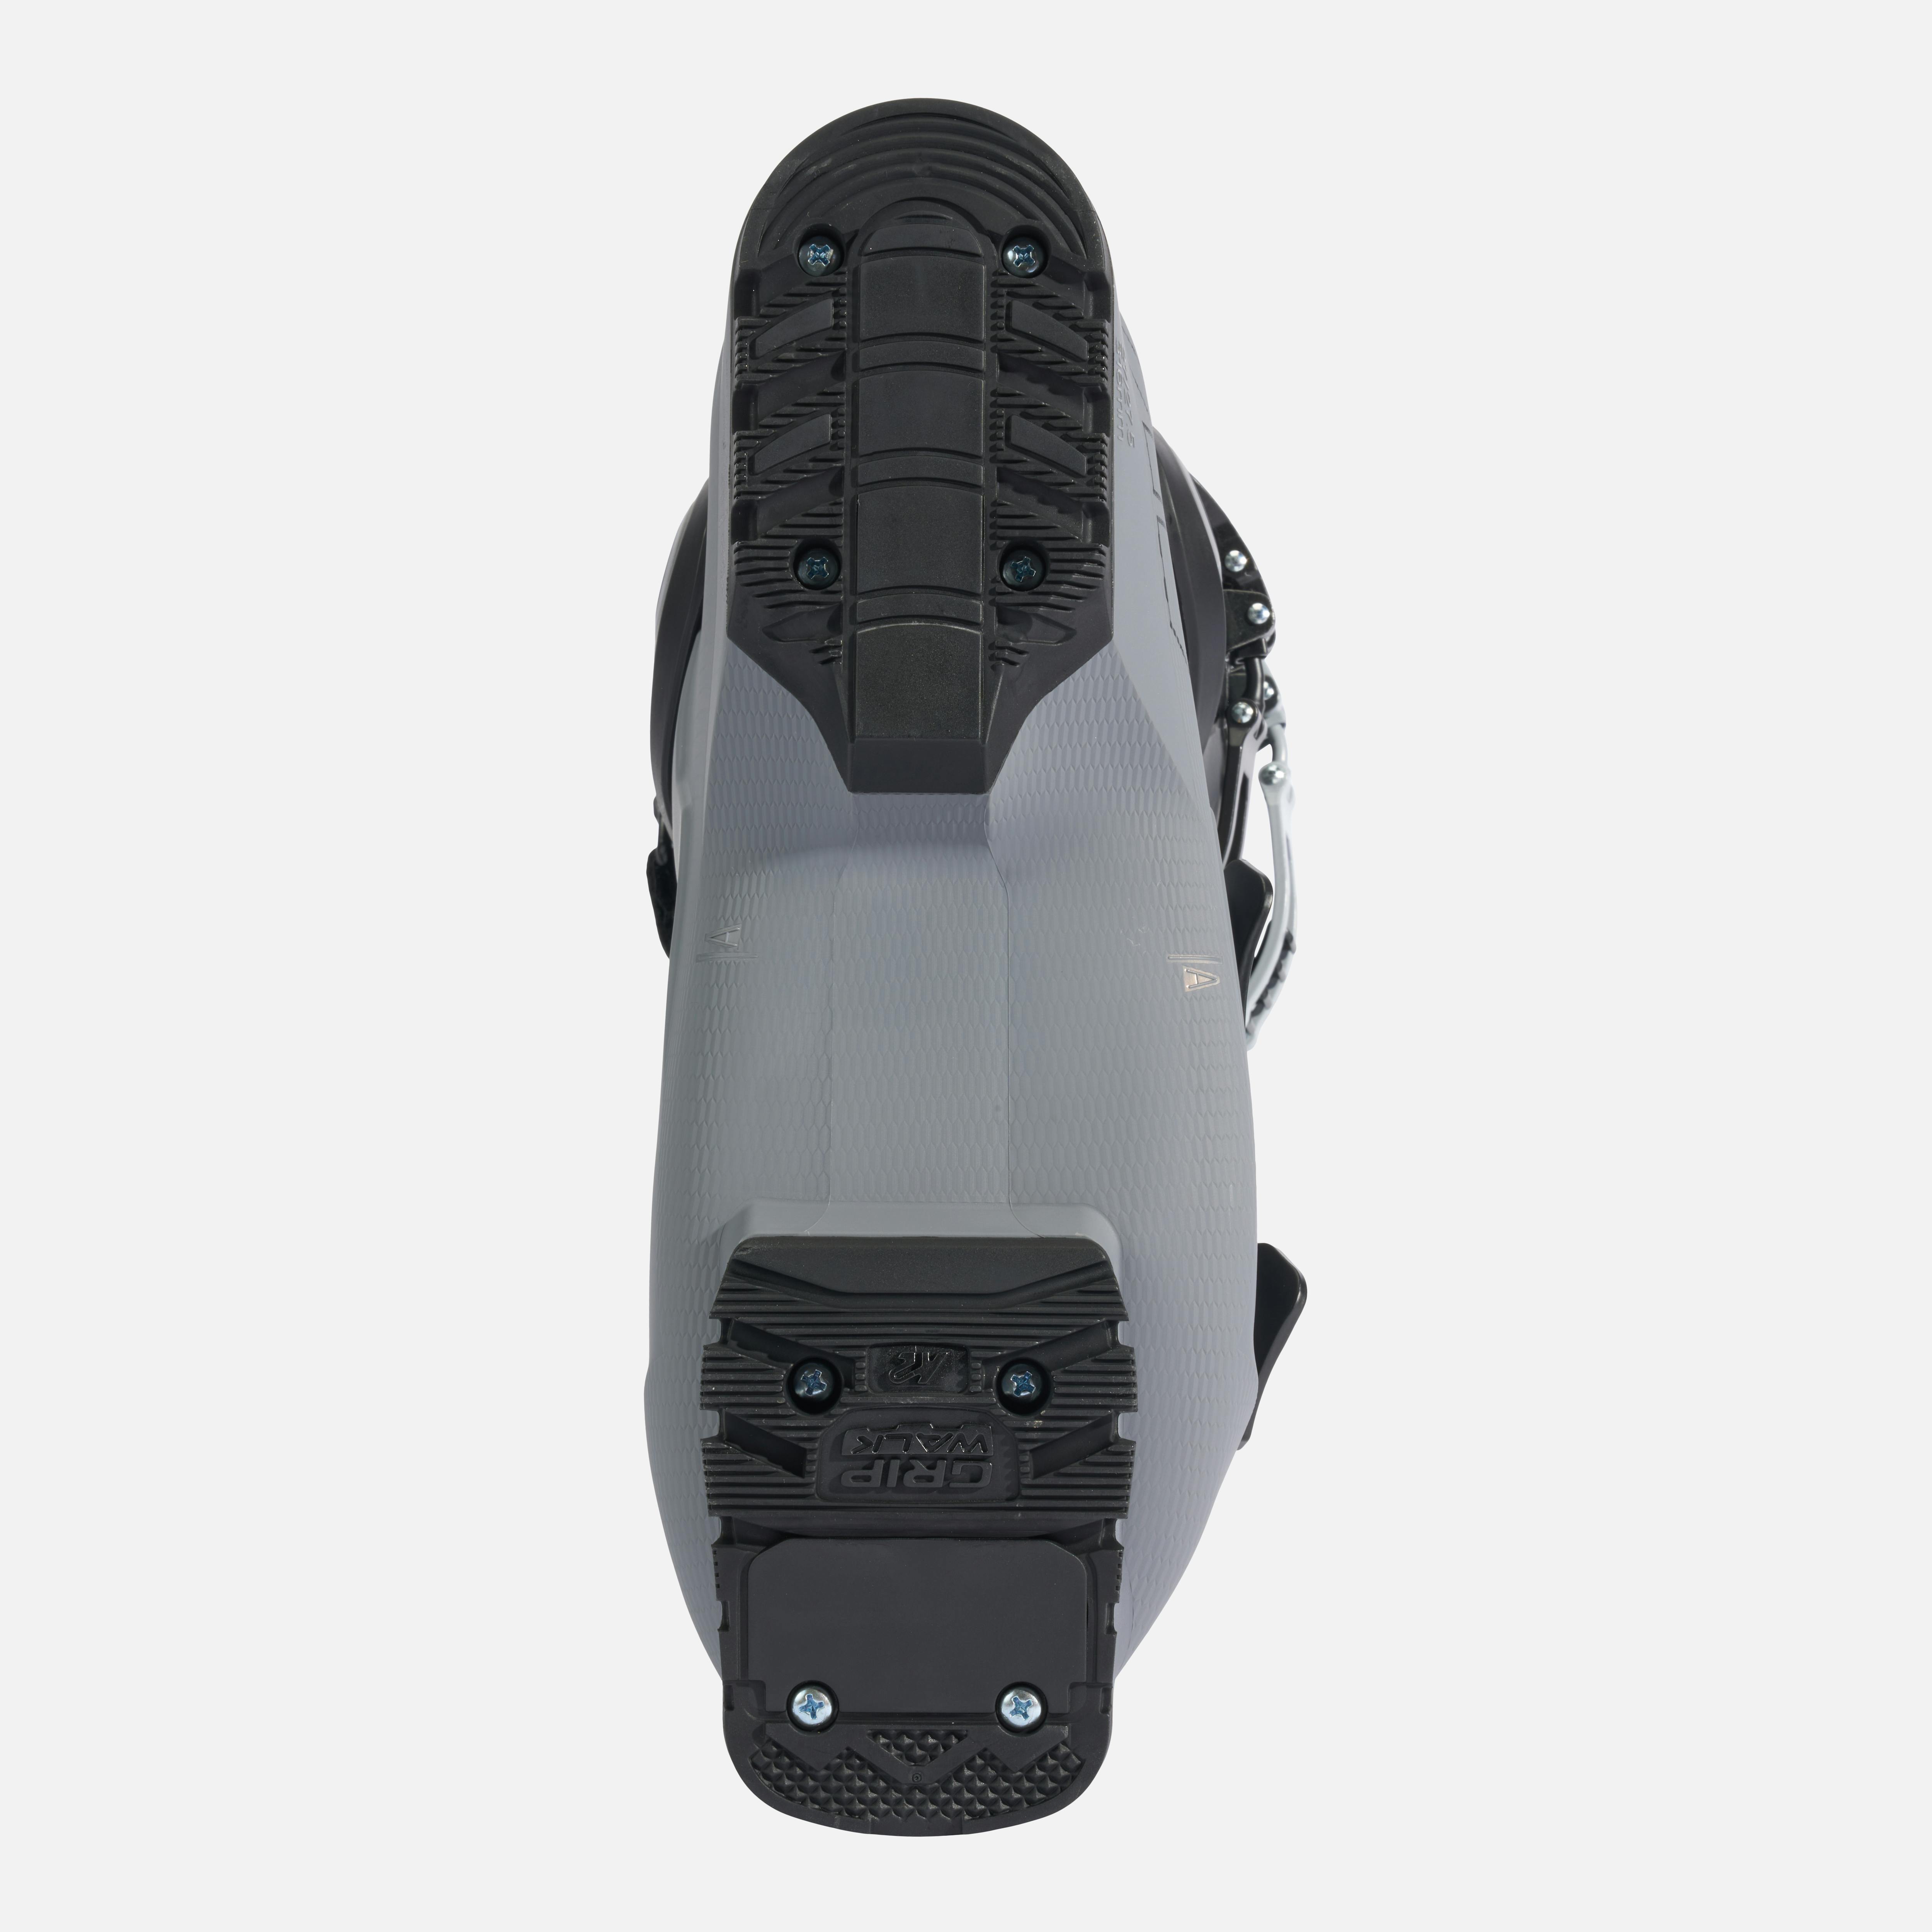 K2 BFC 100 Ski Boots · 2024 · 27.5